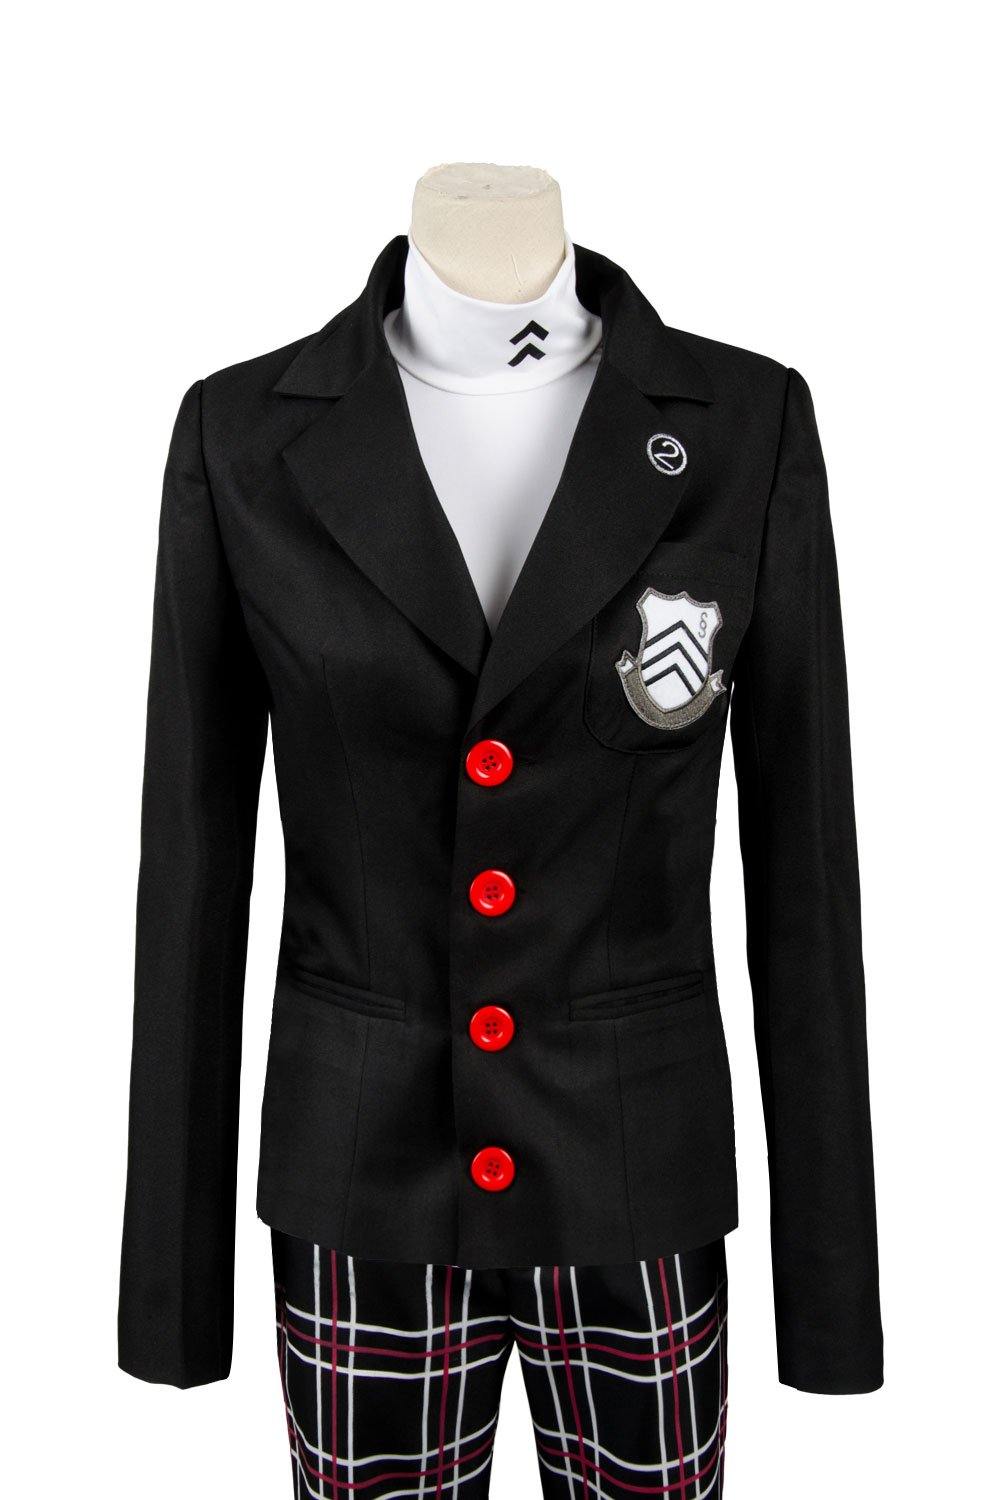 Persona 5 Protagonist Uniform Cosplay Kostüm - cosplaycartde